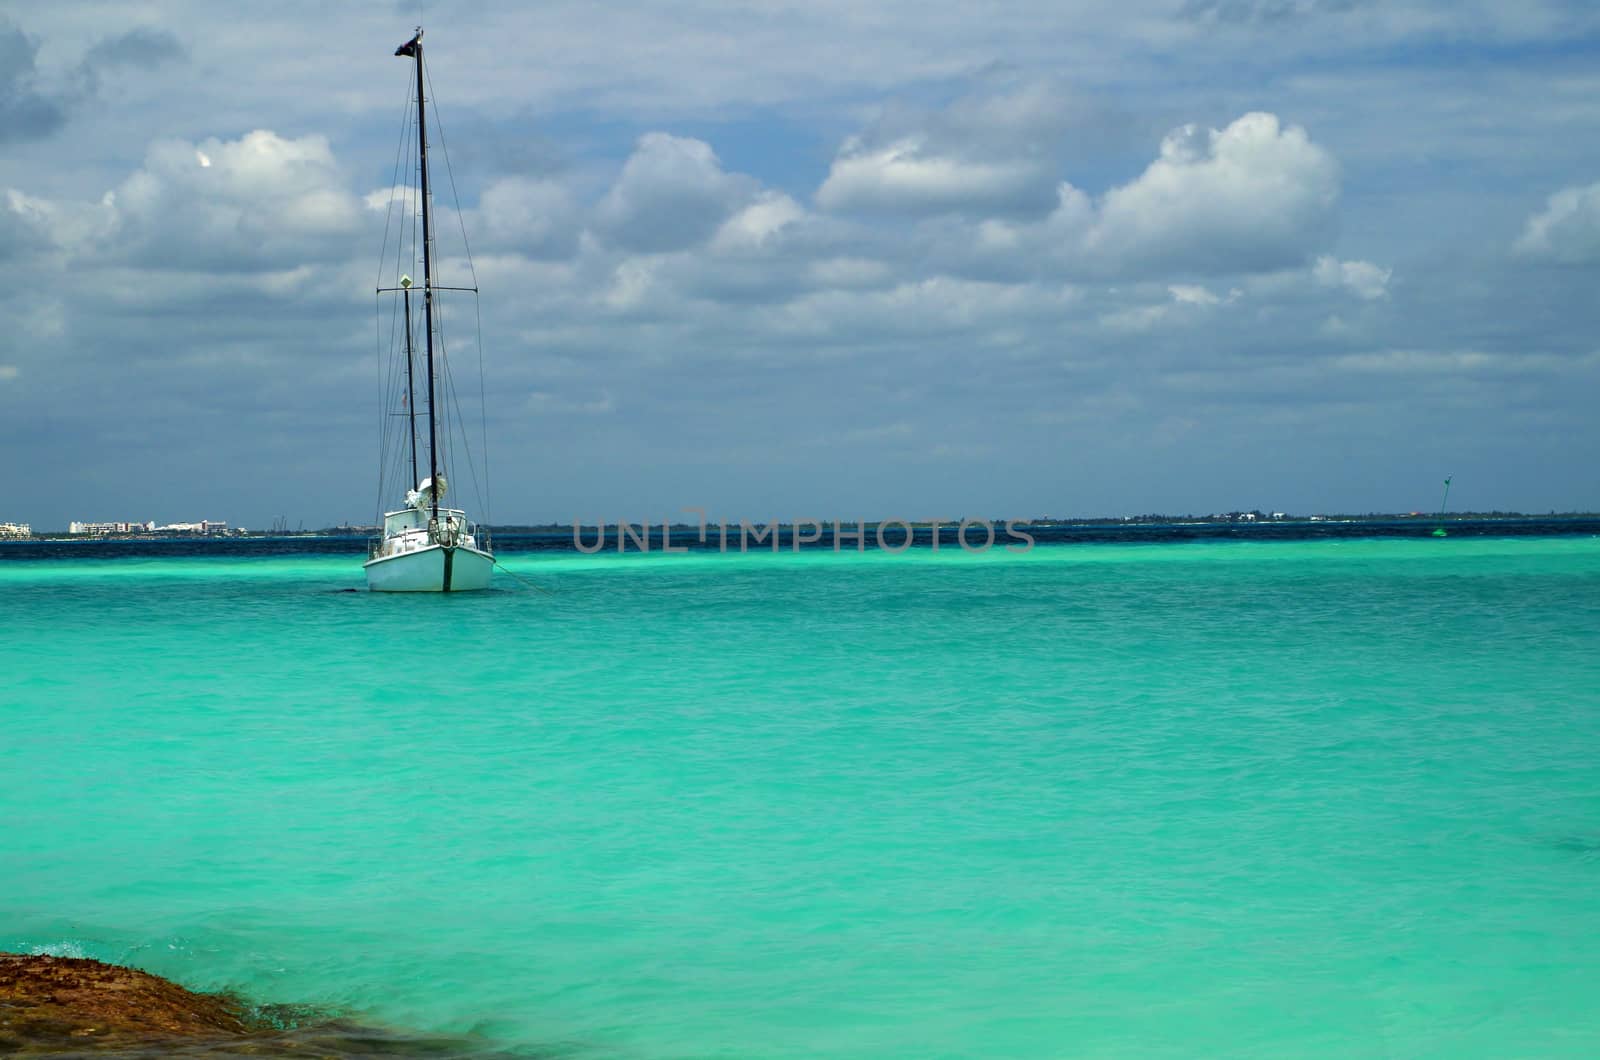 Single sailboat off the coast of Isla Mujeres